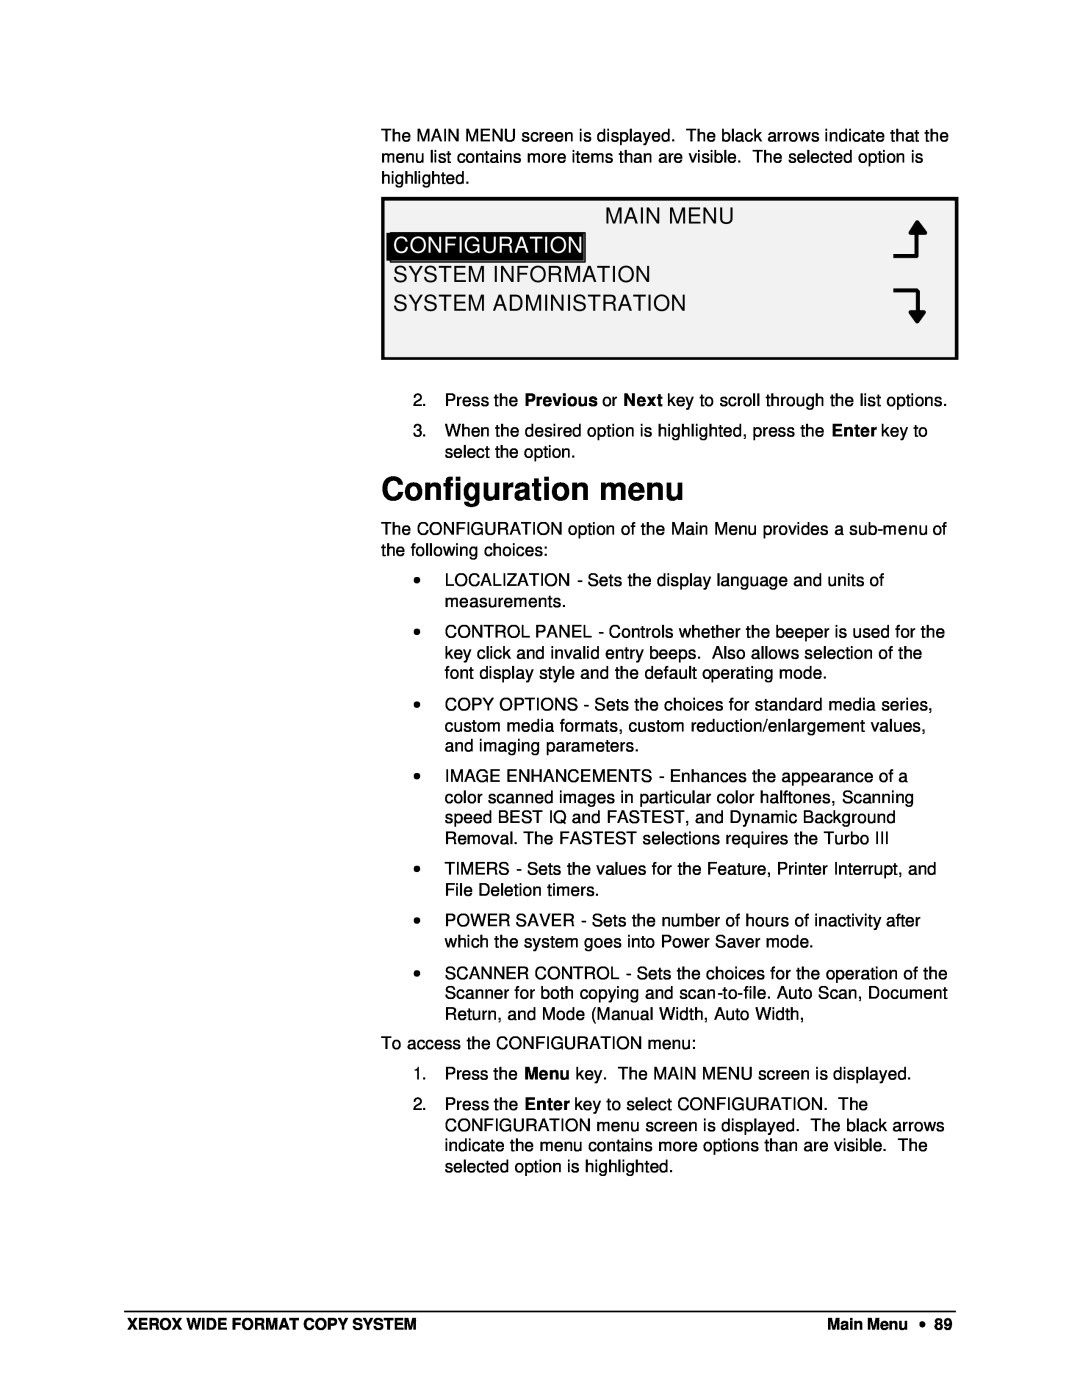 Xerox X2, 8825, 8850, 8830 manual Configuration menu, Main Menu, System Information System Administration 